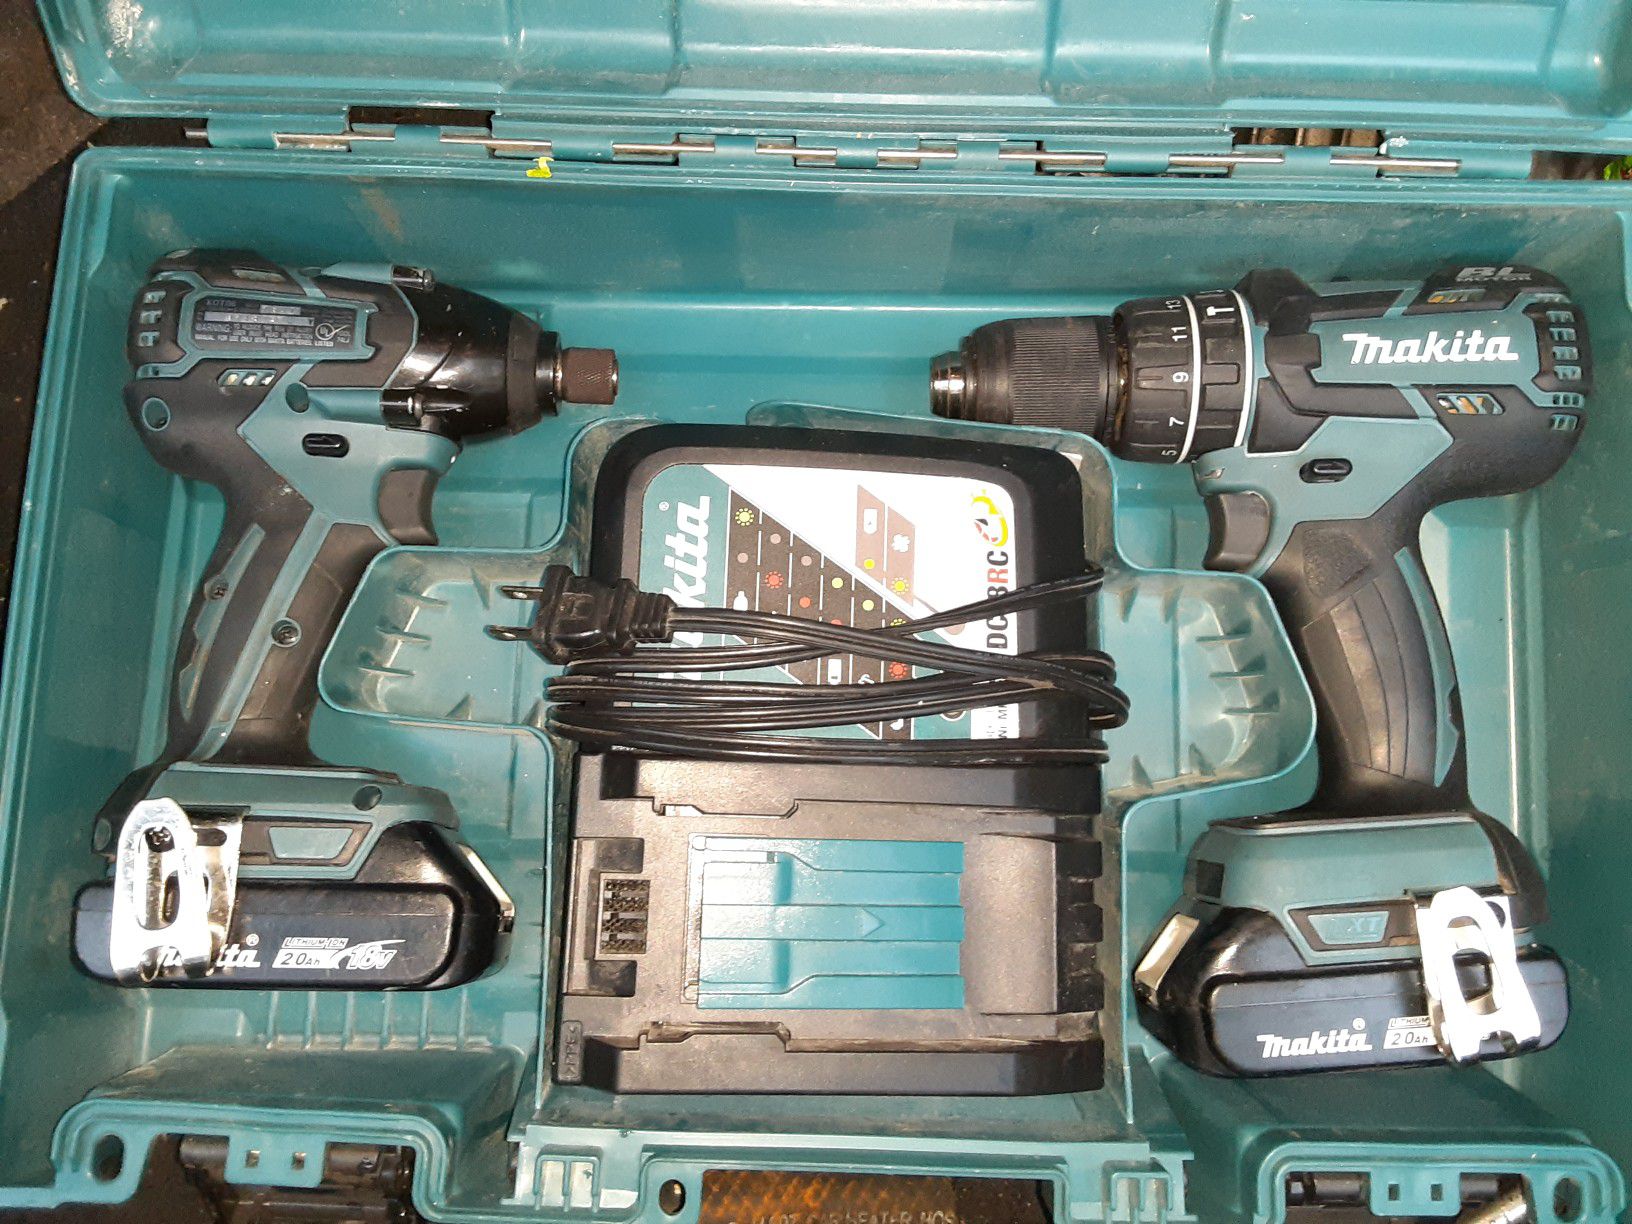 Makita hammer drill & impact driver kit